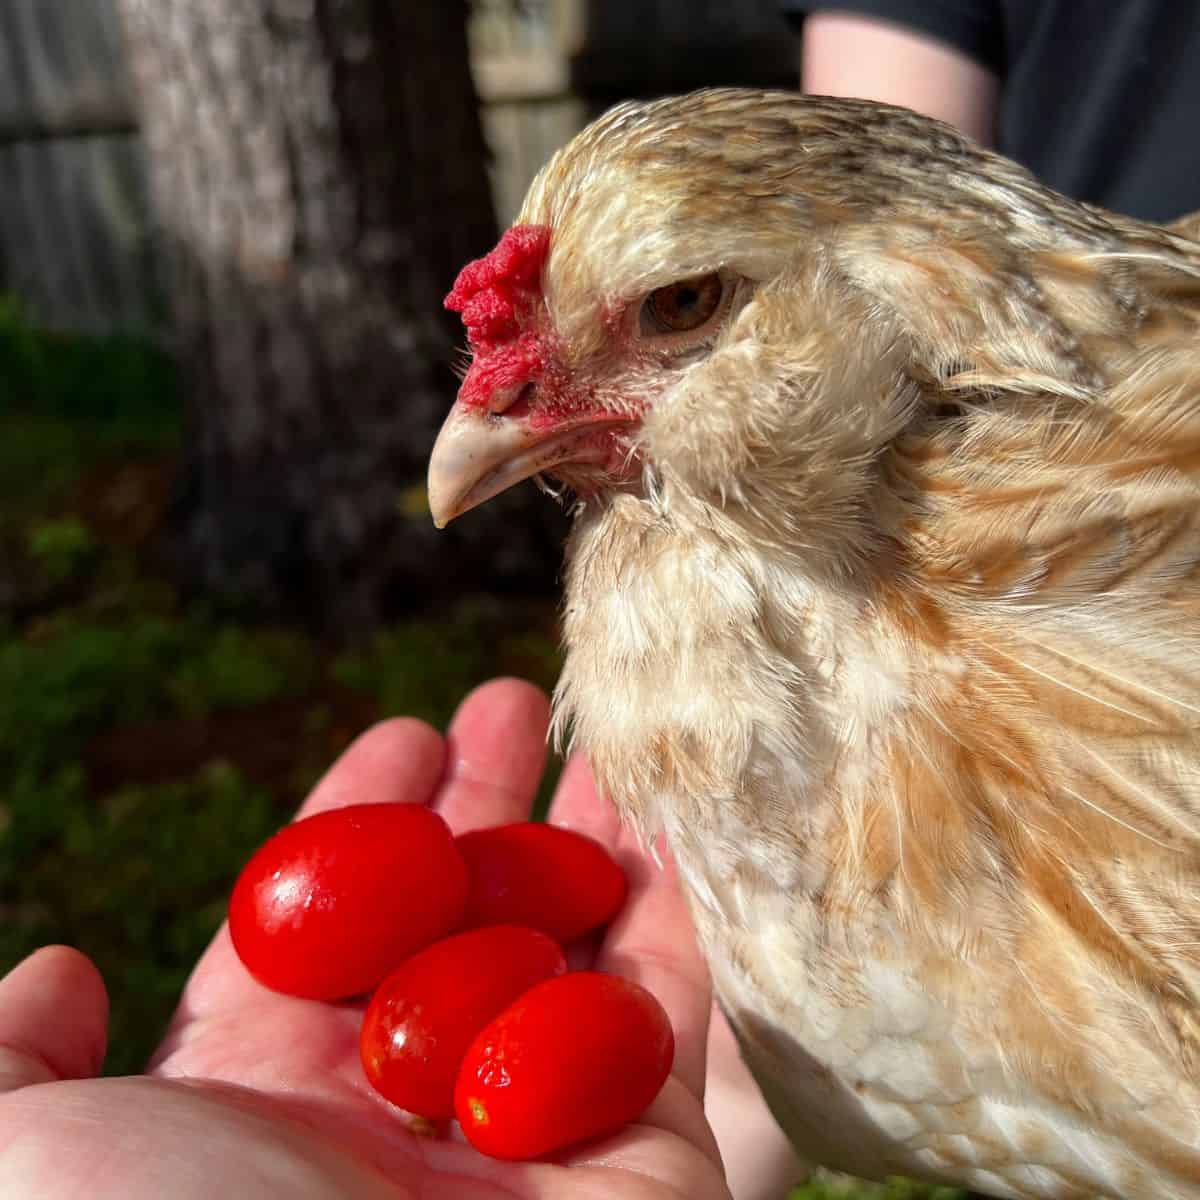 Chicken being held next to handful of cherry tomatoes.